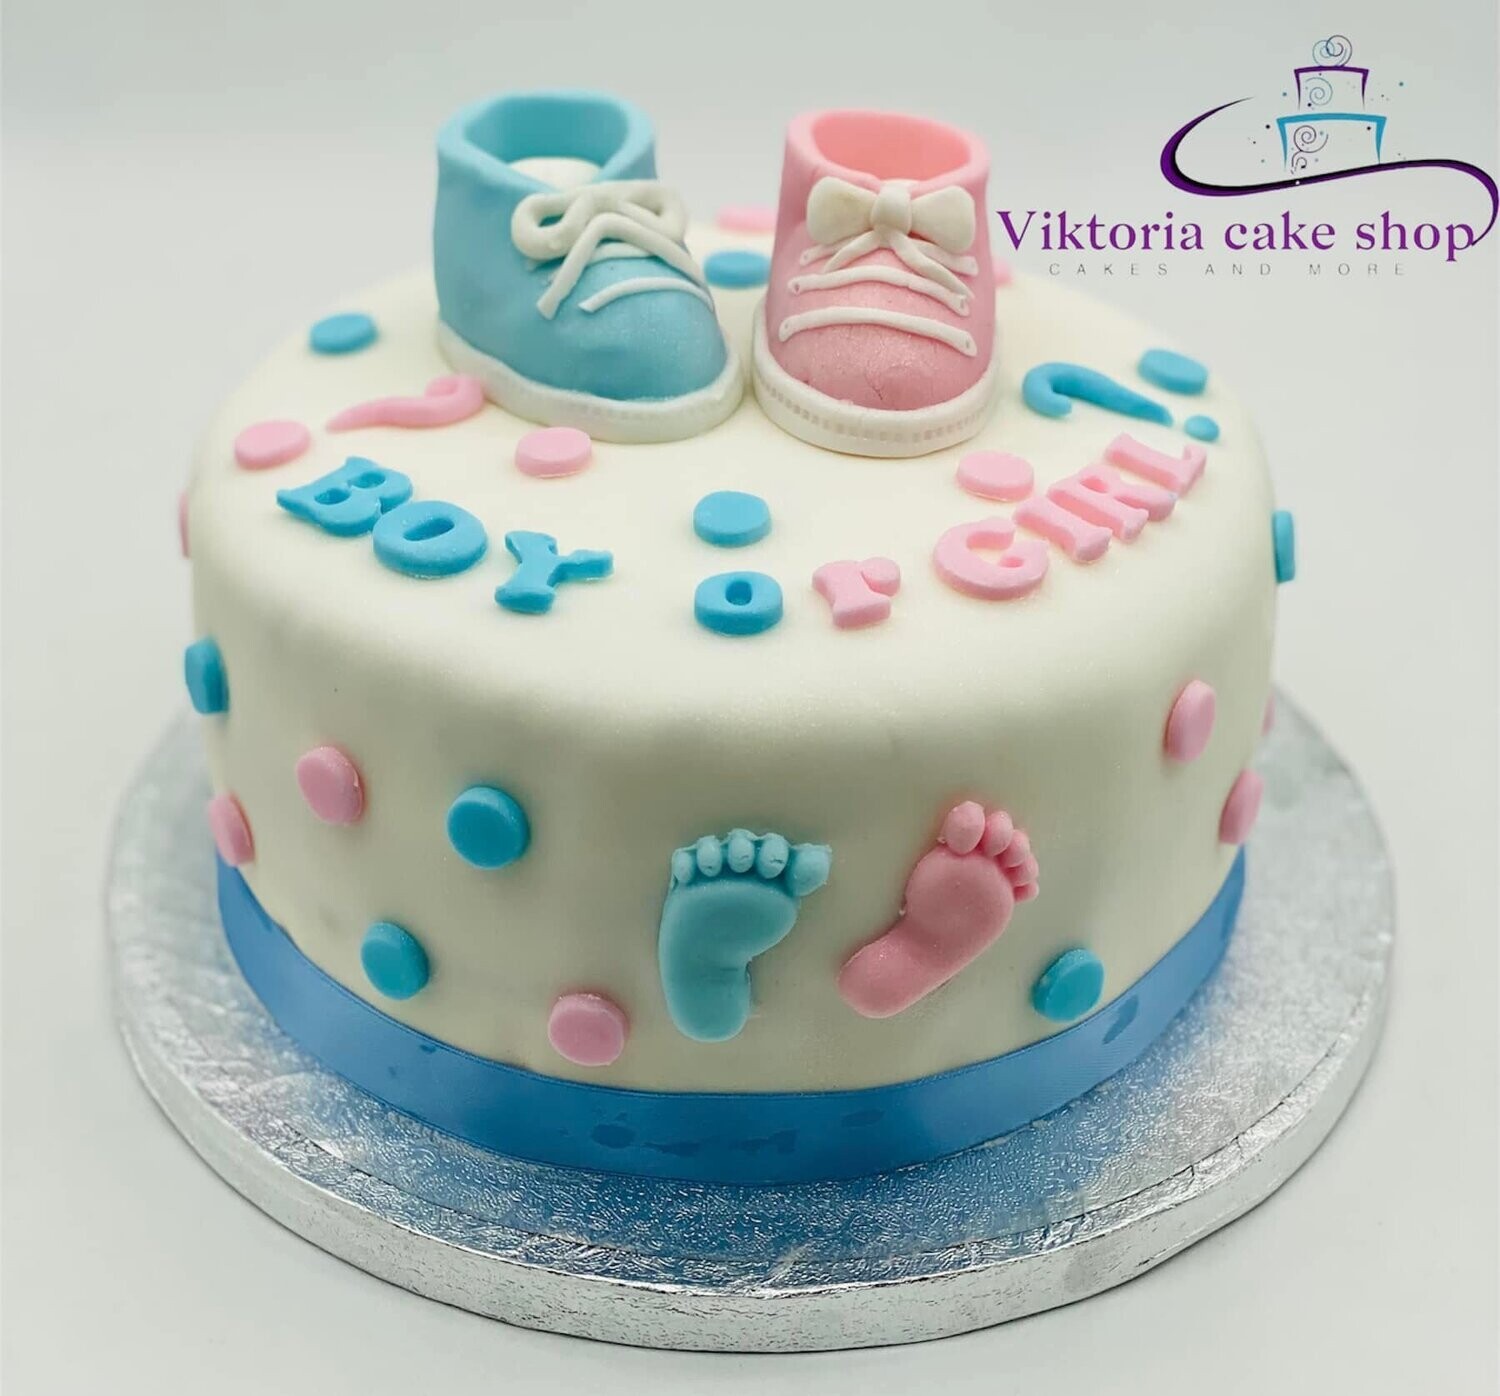 Baby Shower / Gender Reveal 3D Birthday cake Pink or Blue Egg free sponge